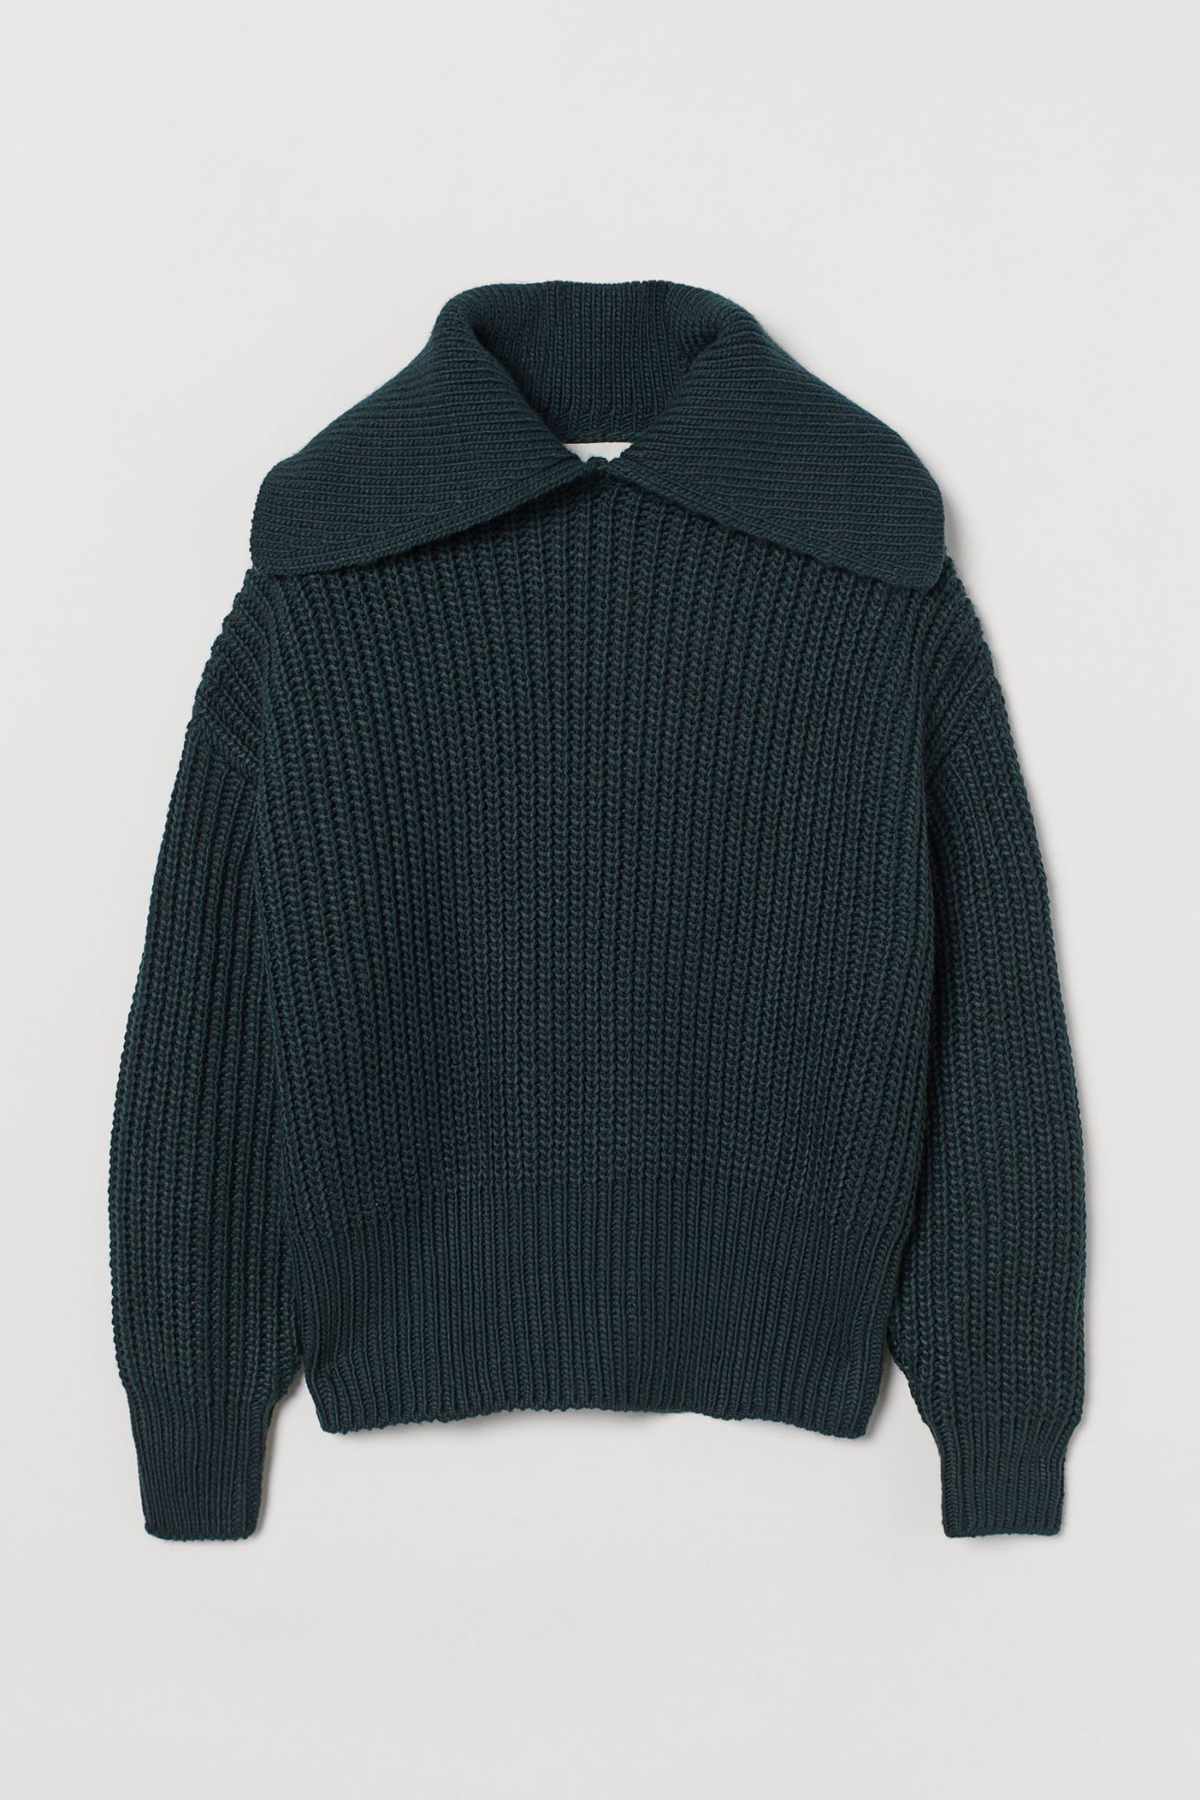 Collared Rib-Knit Sweater